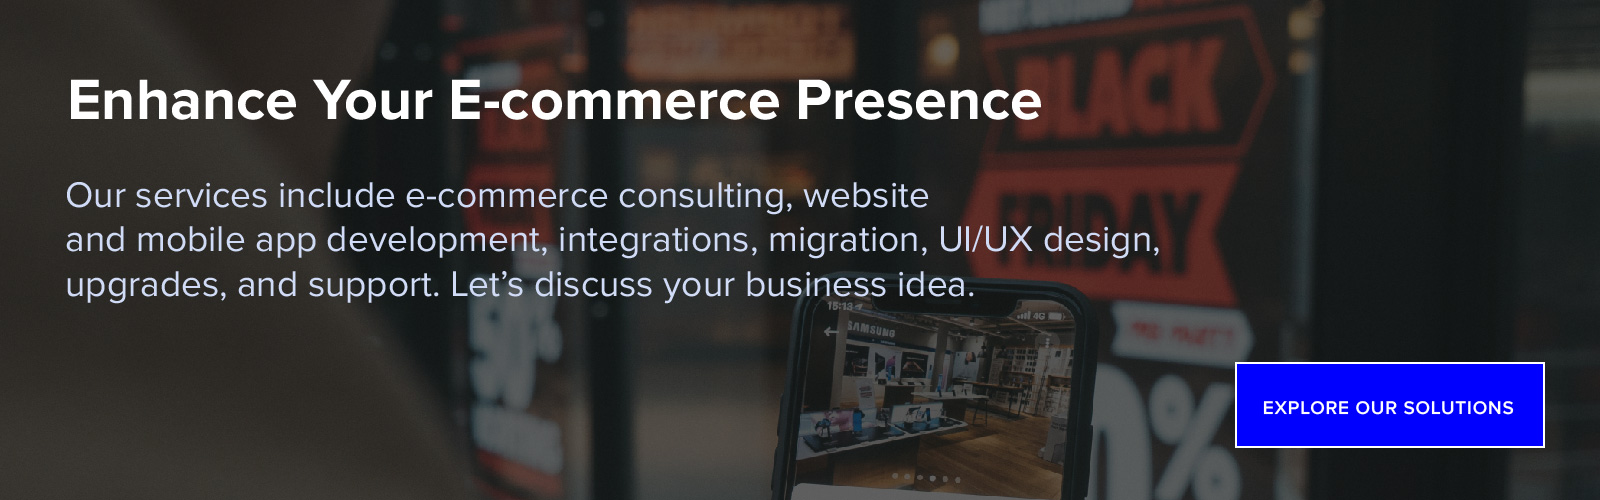 Enhance Your E-commerce Presence